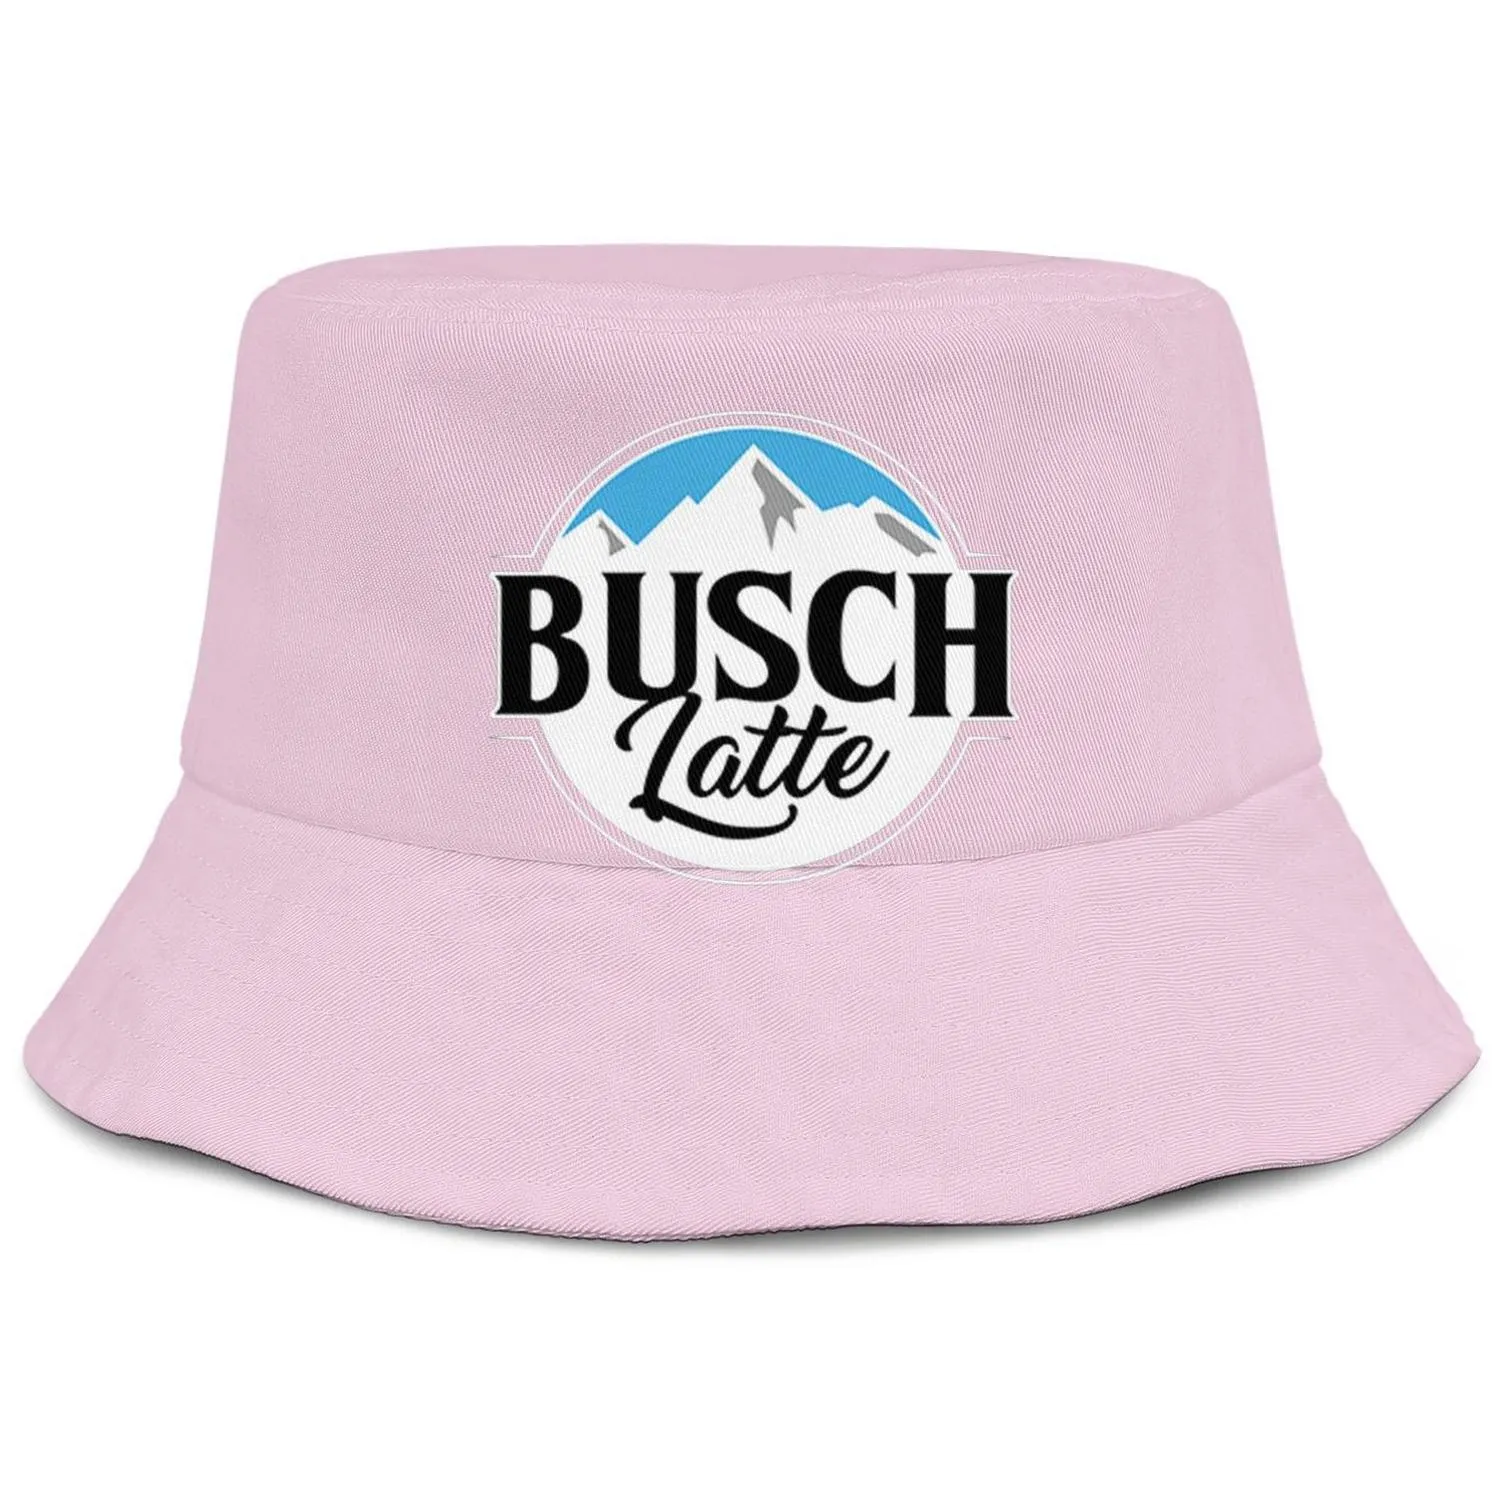 Busch Light Beer Logo Mens and Womens Buckethat Cool Youth Bucket Baseballcap Light Blue Adge White Latte Så mycket278J